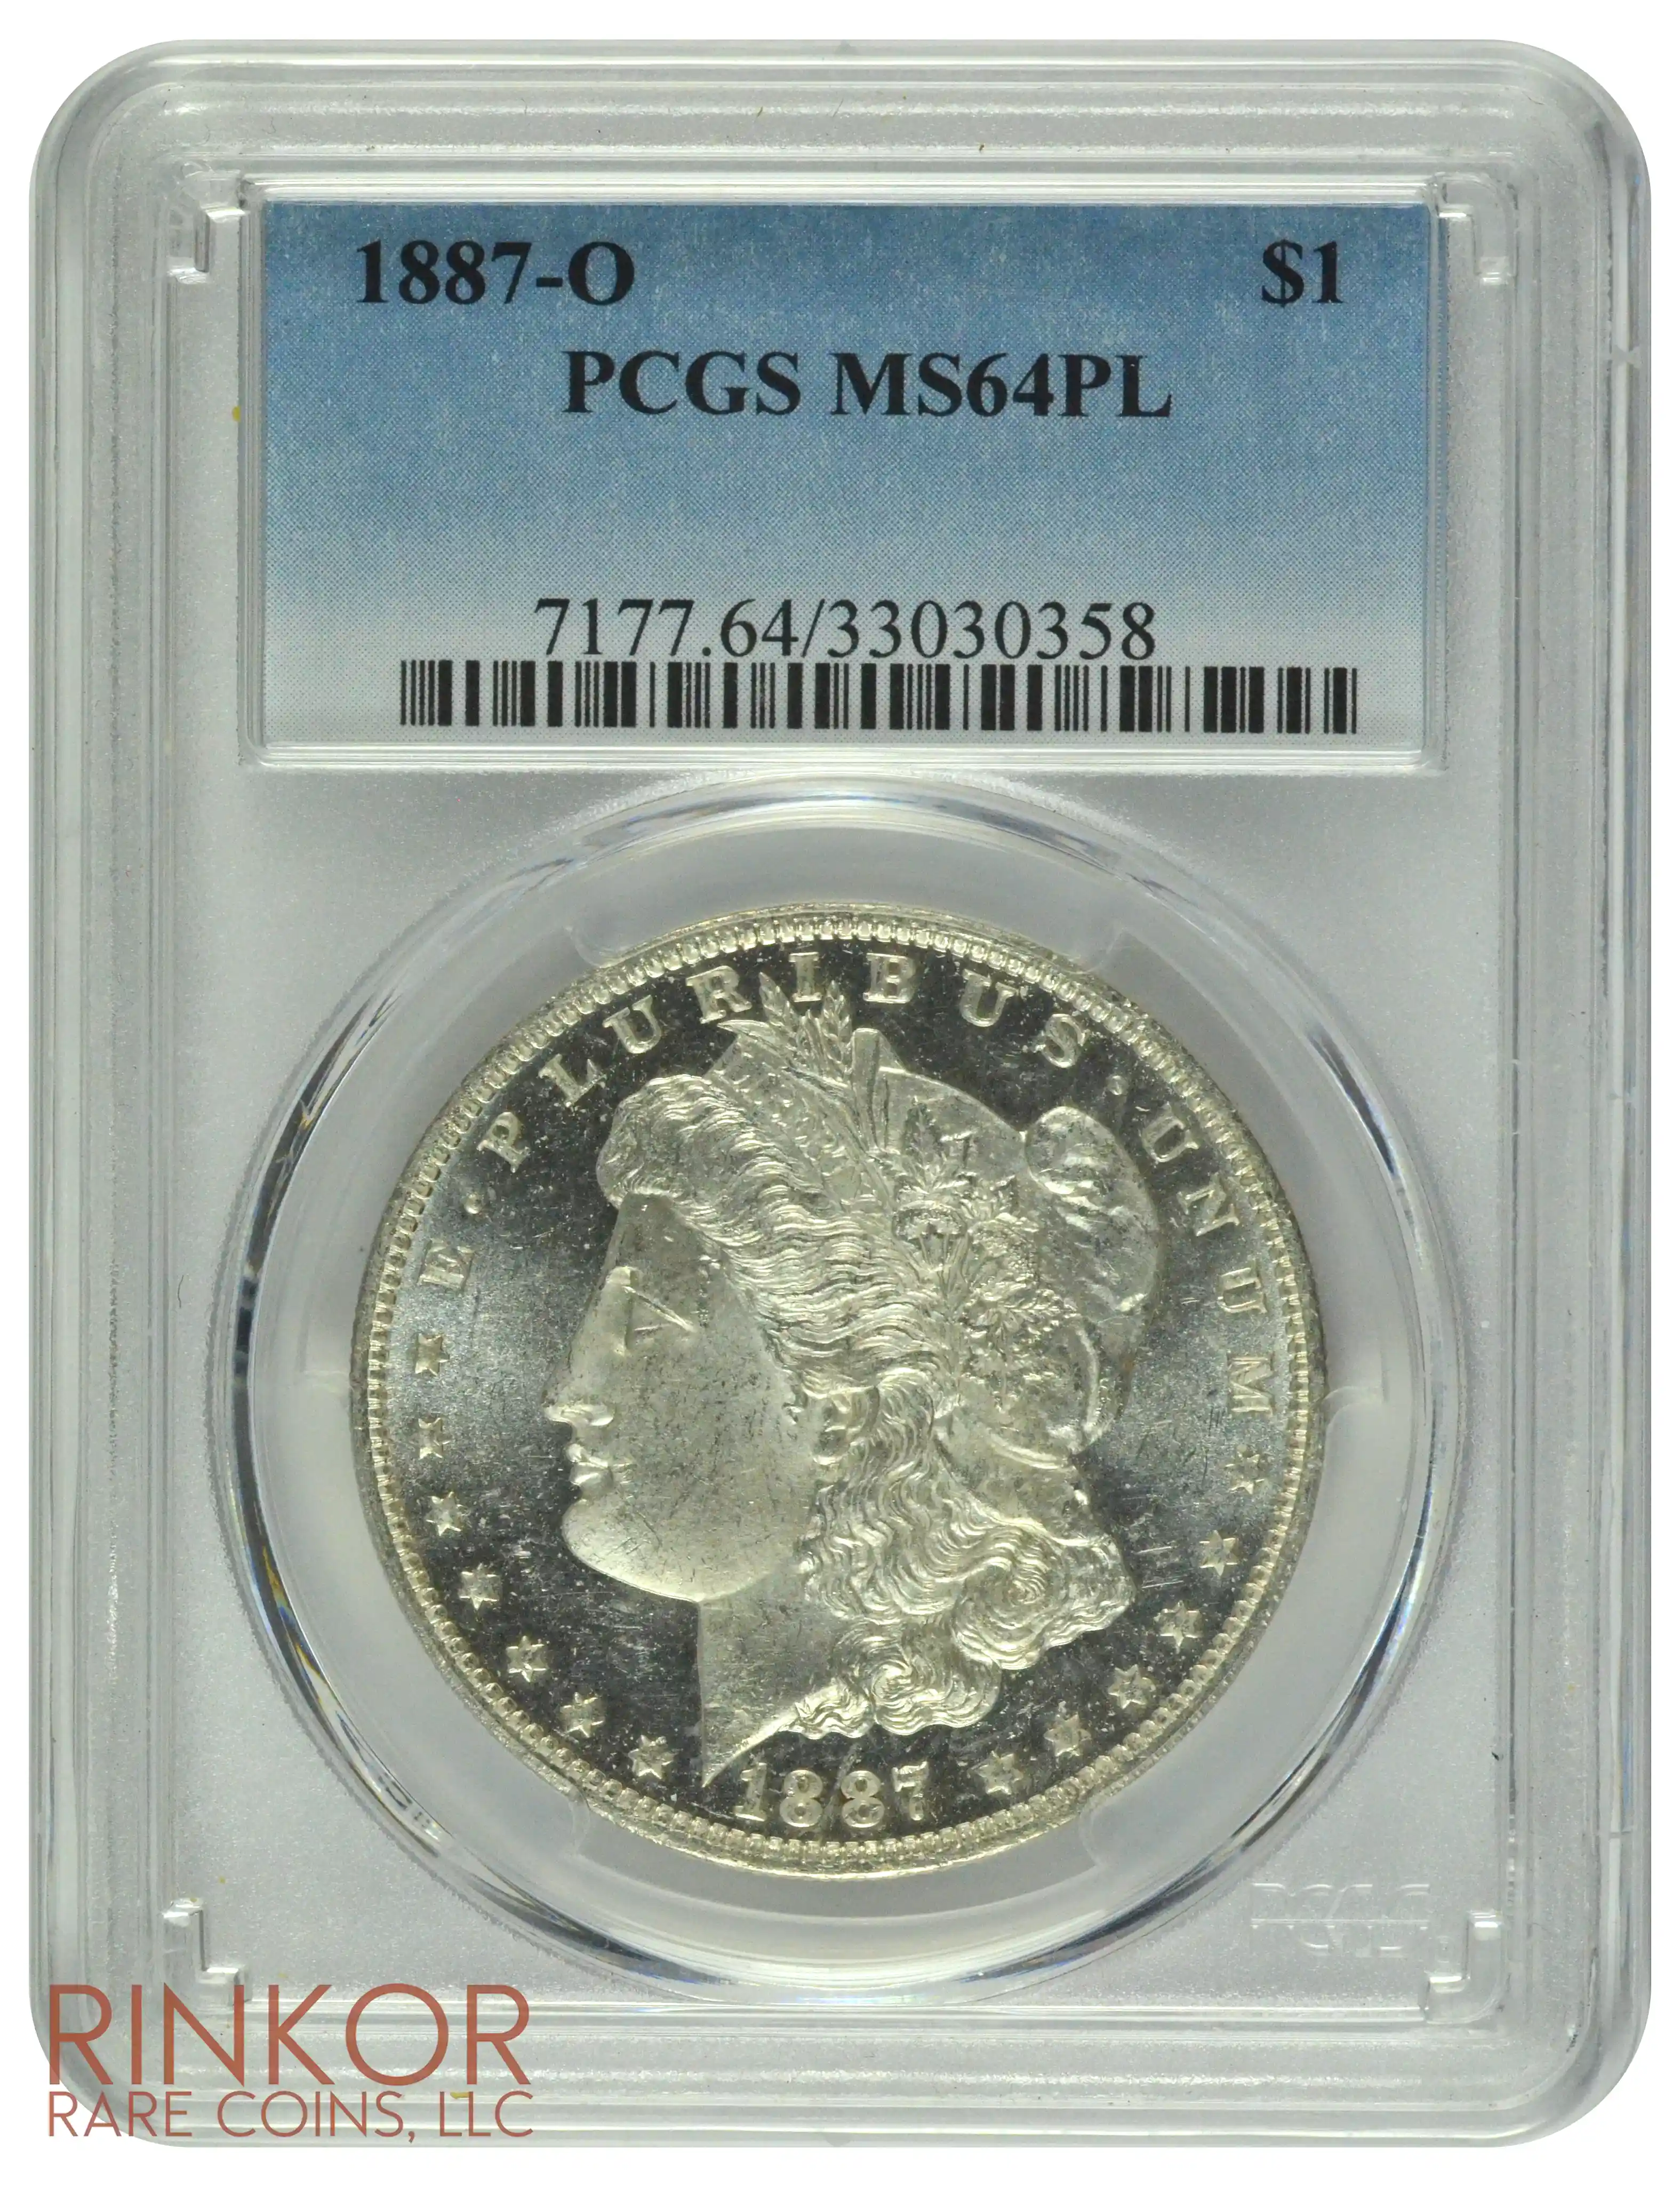 1887-O $1 PCGS MS 64 PL